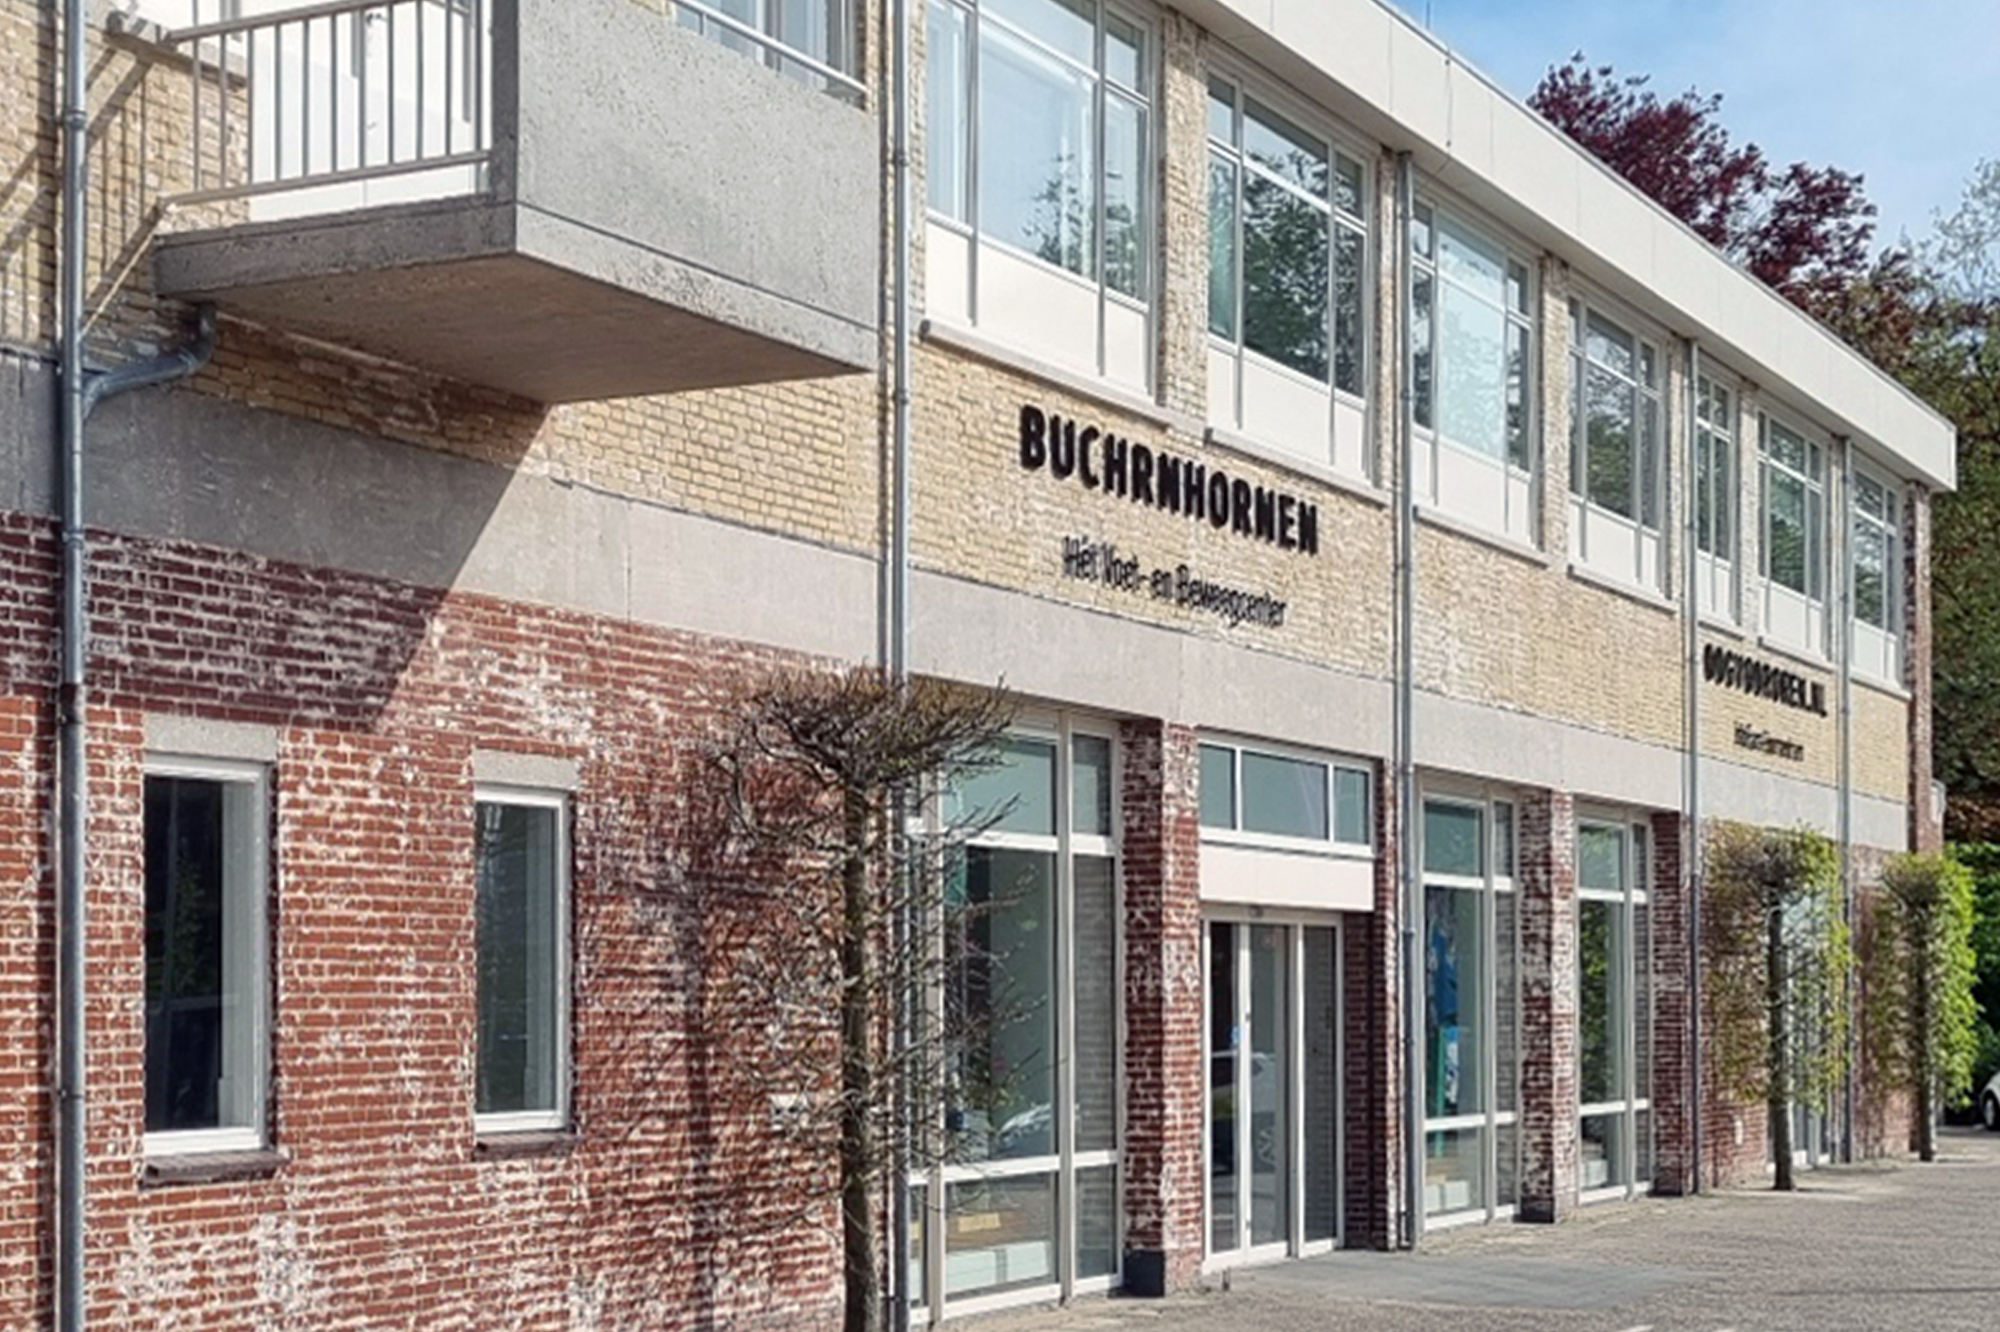 Buchrnhornen Tilburg